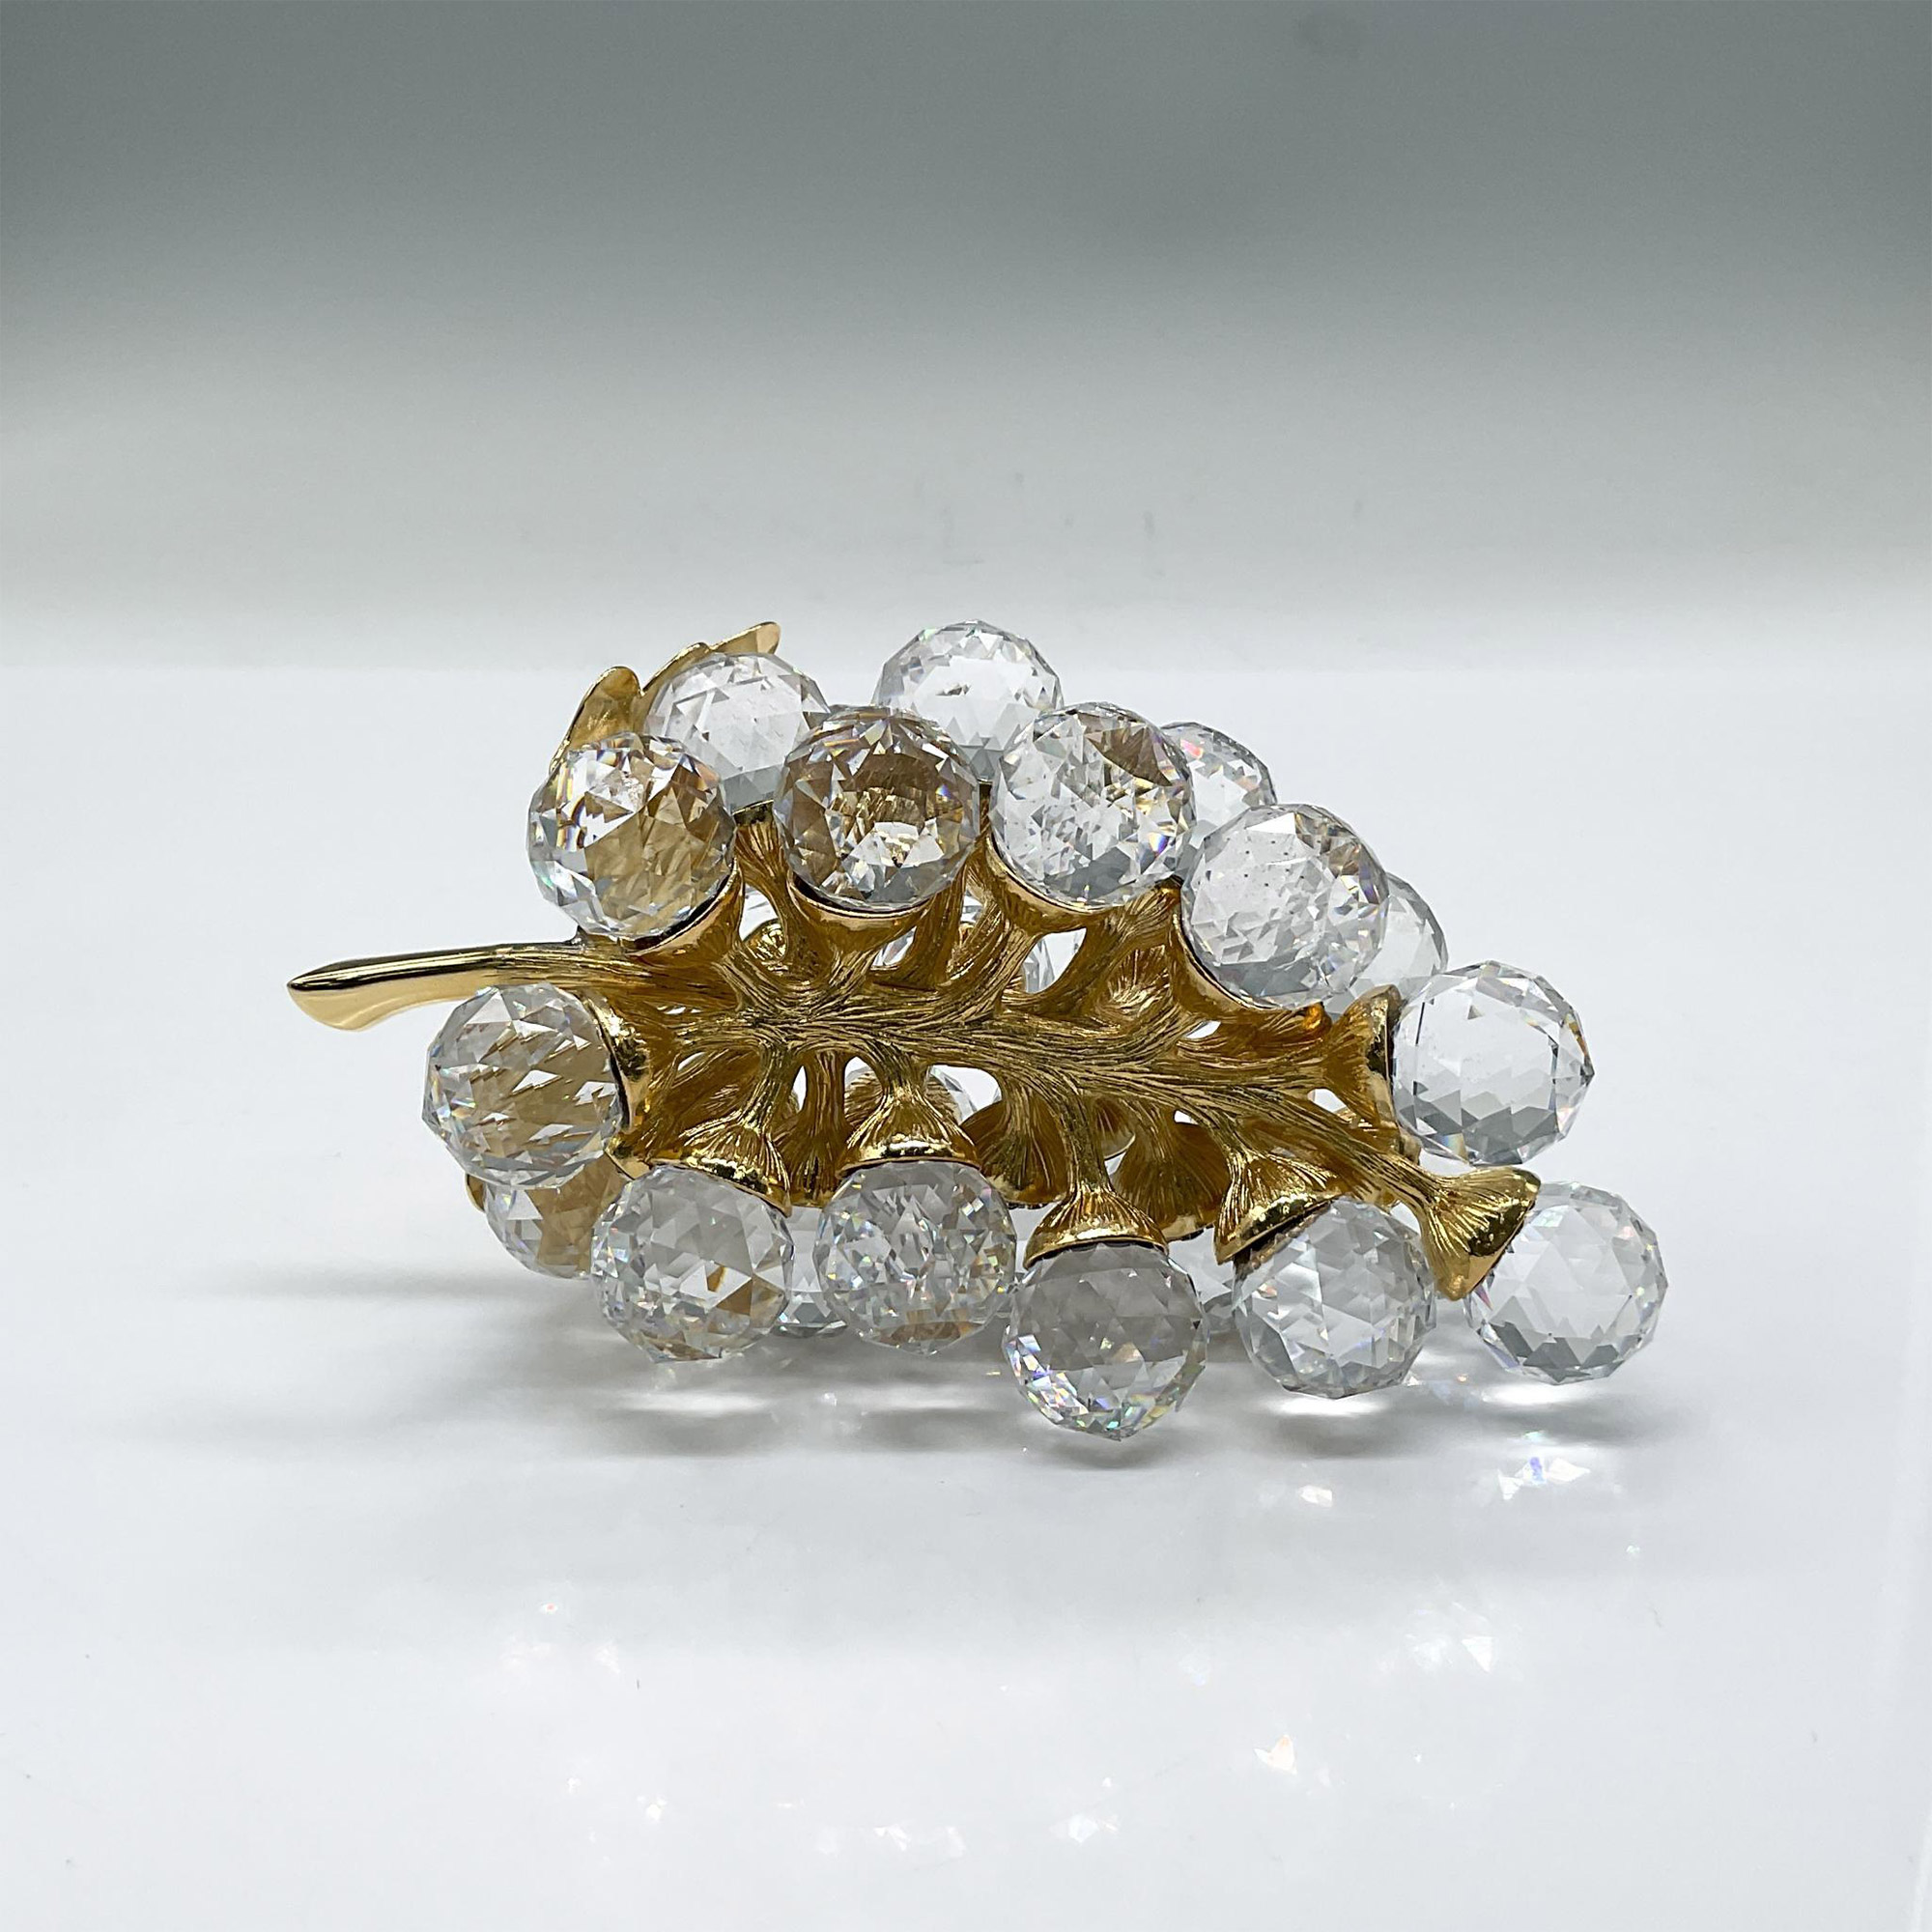 Swarovski Crystal Figurine, Grapes, Medium - Image 4 of 4